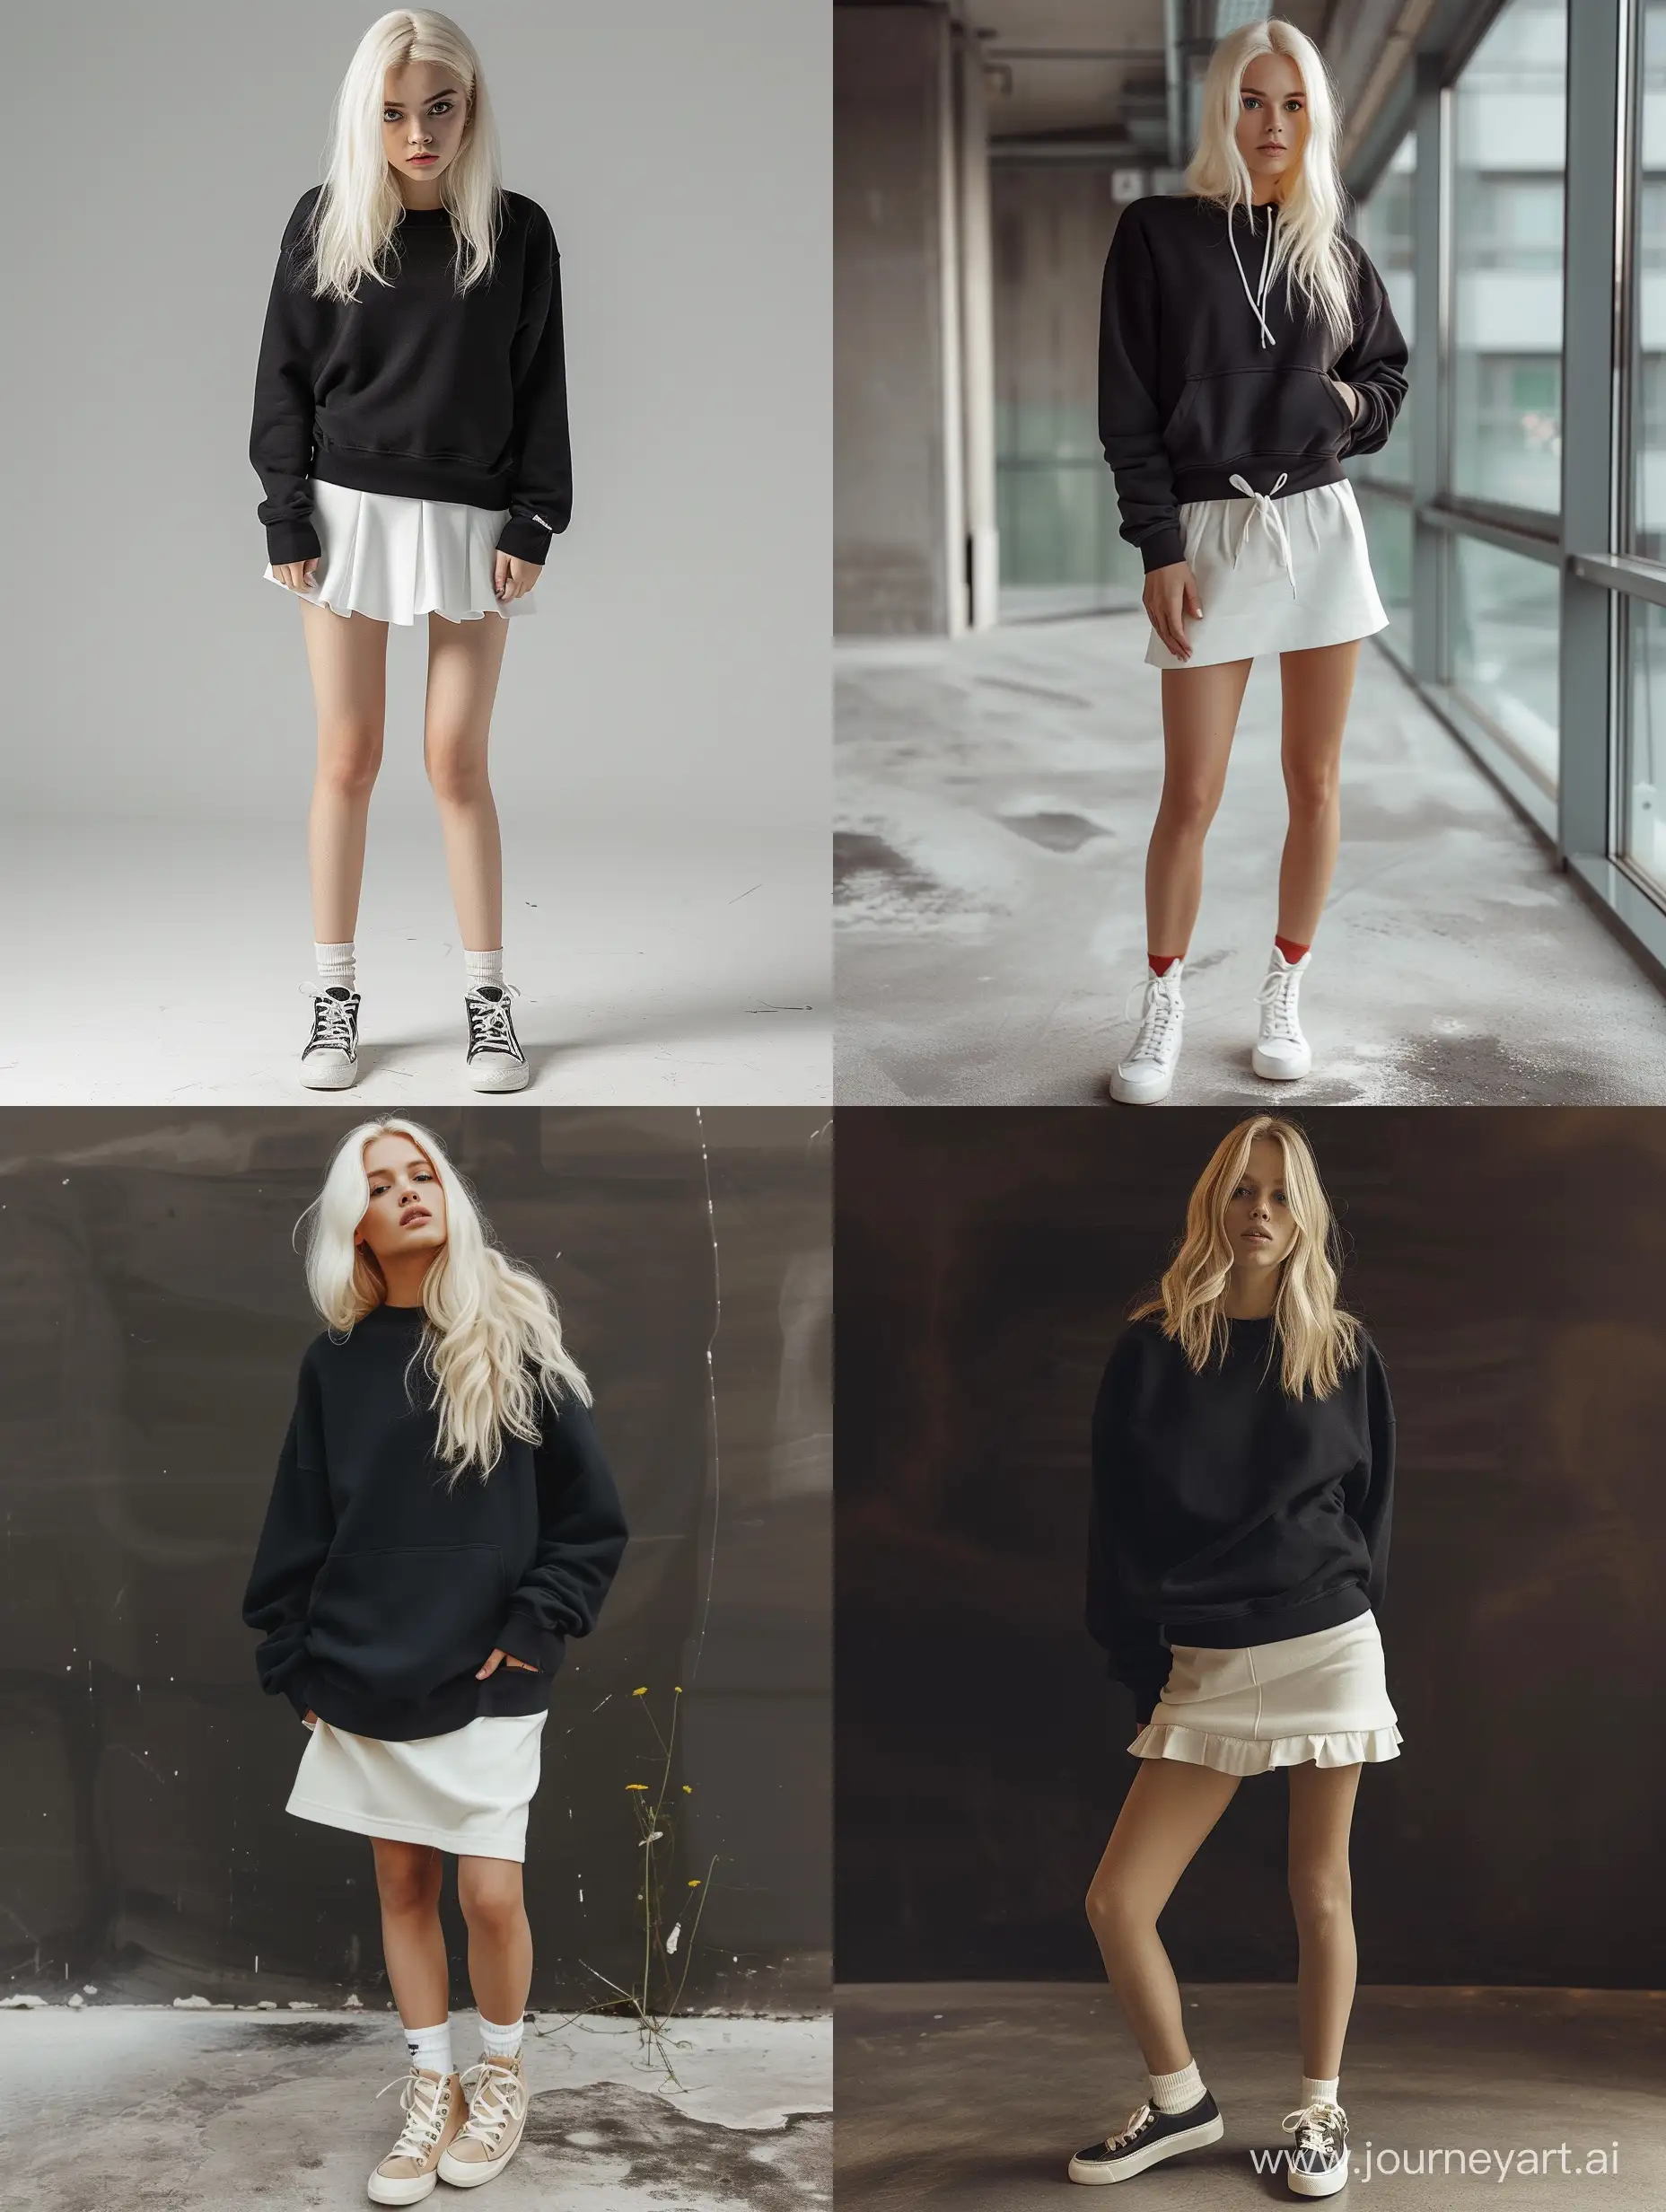 Elegant-Blonde-Fashion-Model-in-Black-Sweatshirt-and-White-Skirt